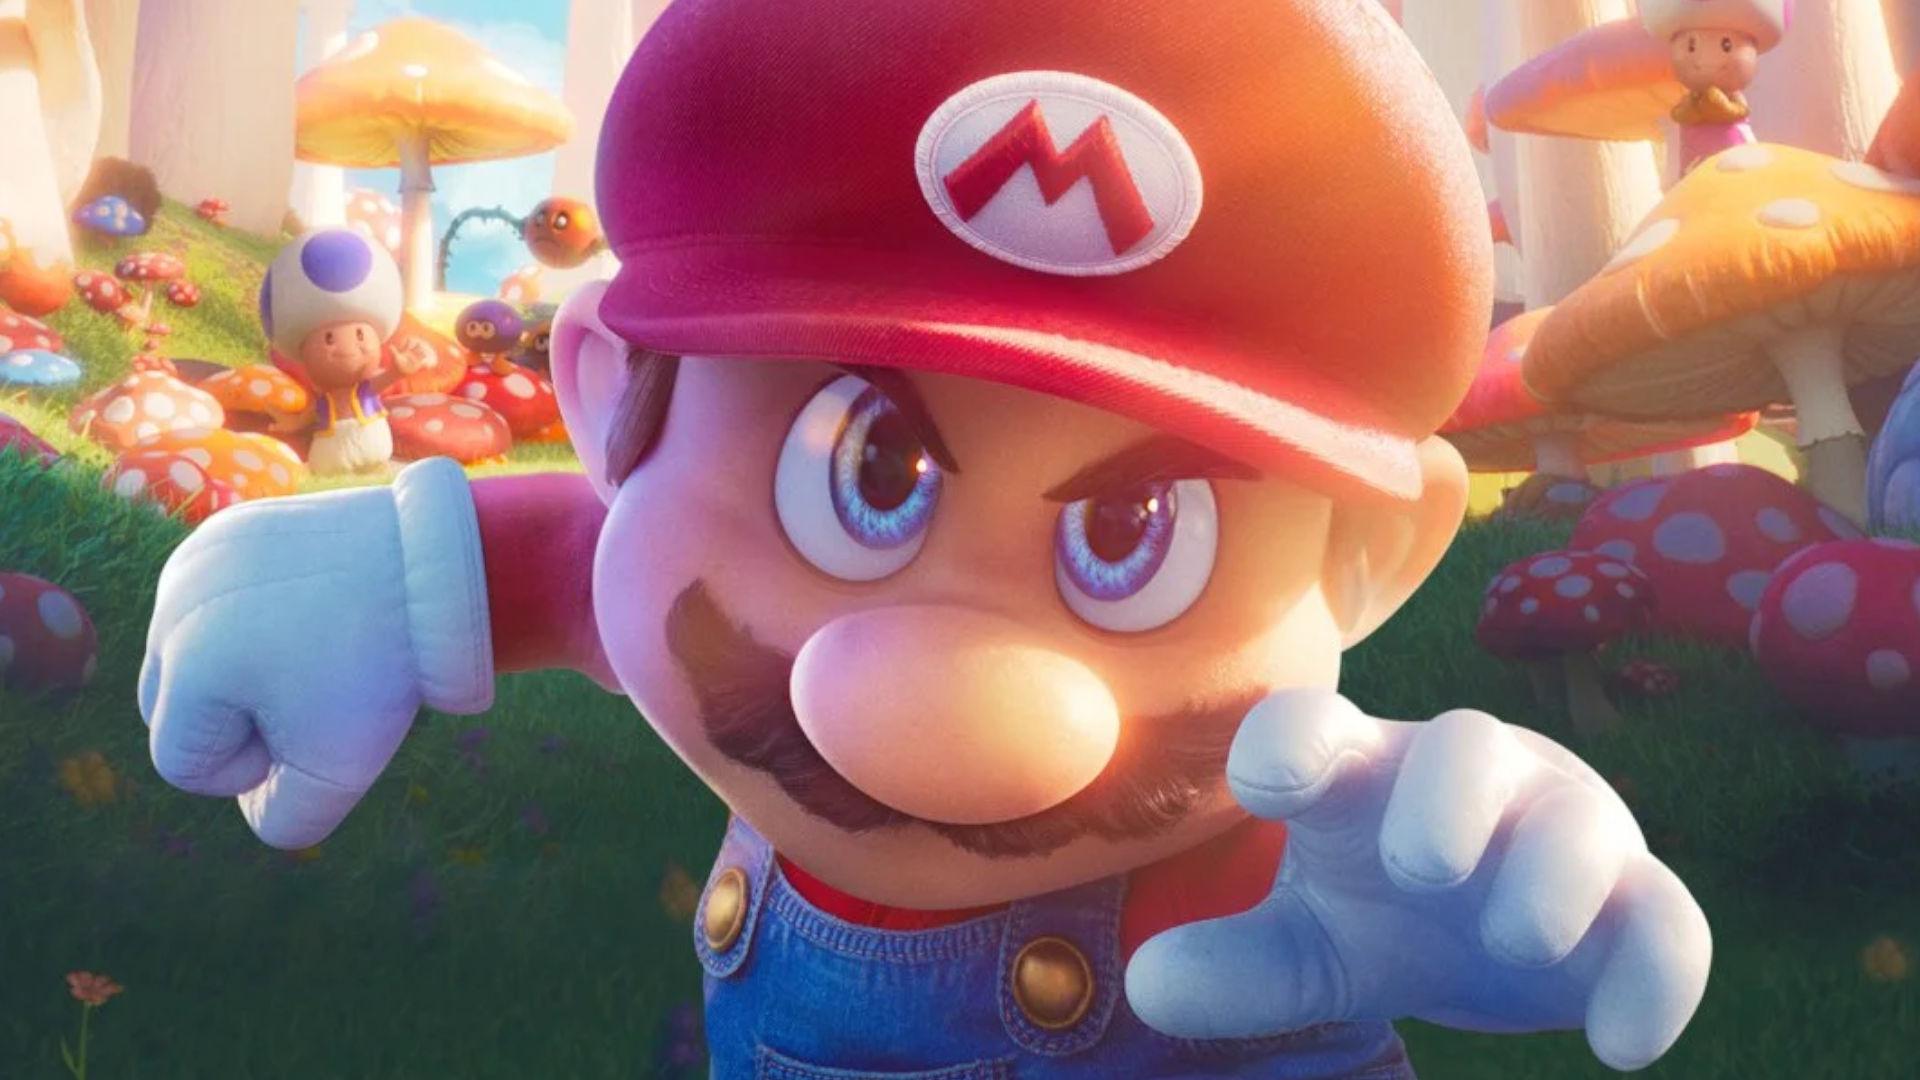 Reddit ranks the Super Mario movie character designs